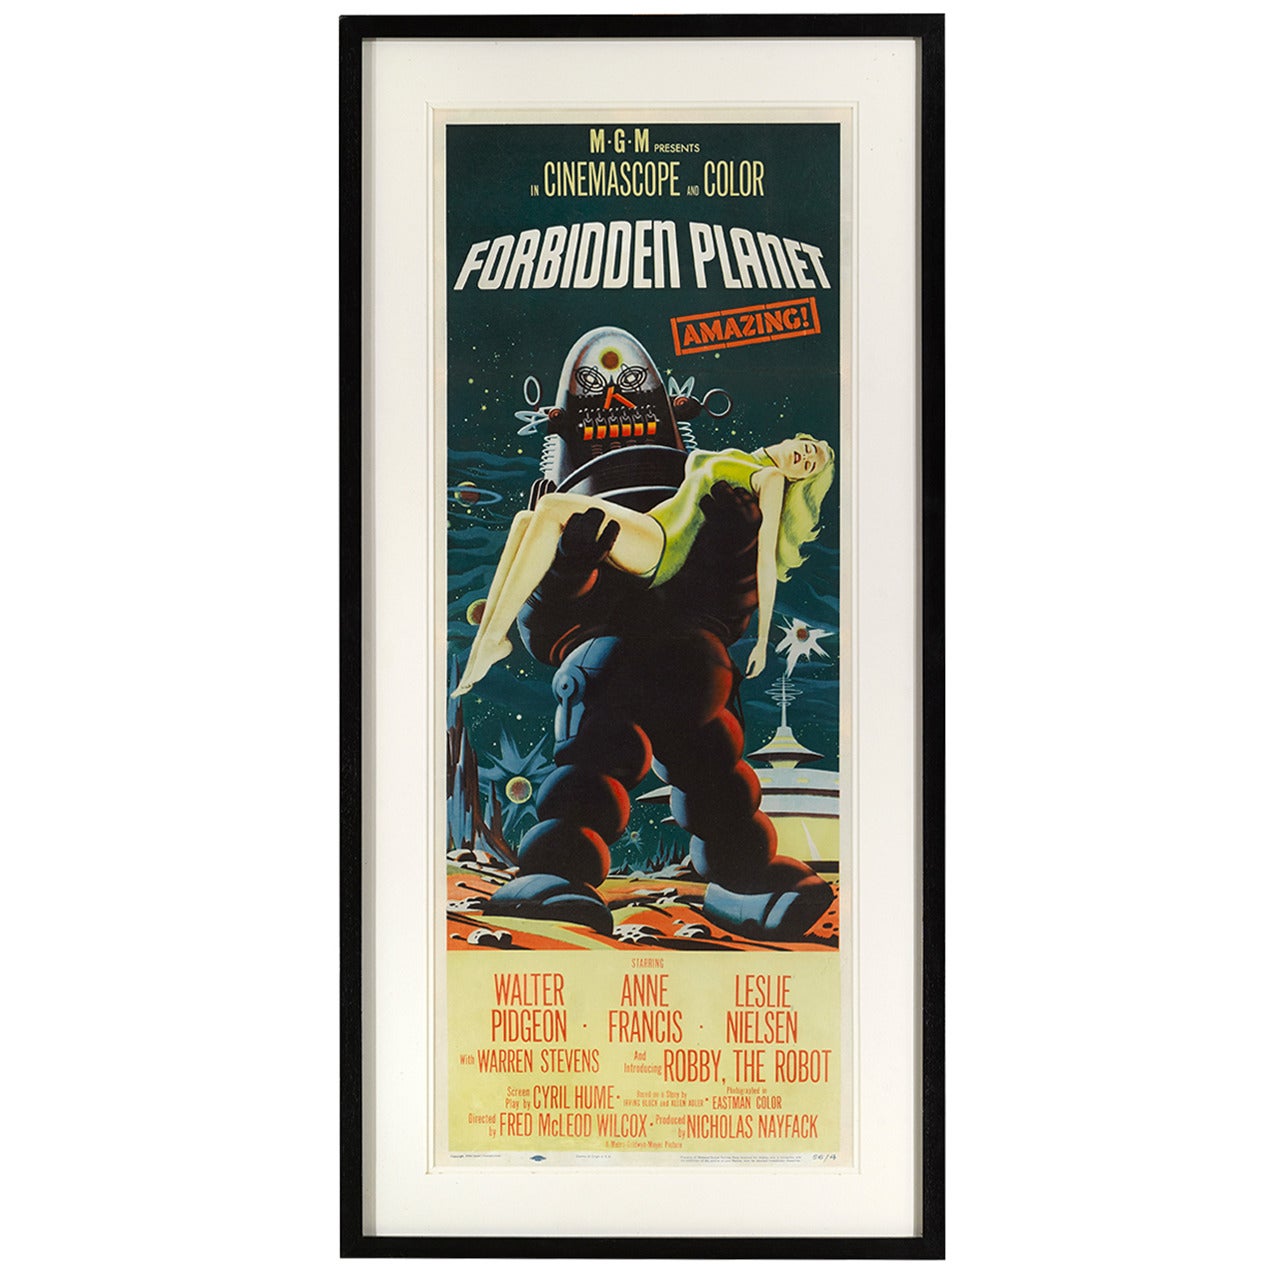 "Forbidden Planet" Original US Movie Poster